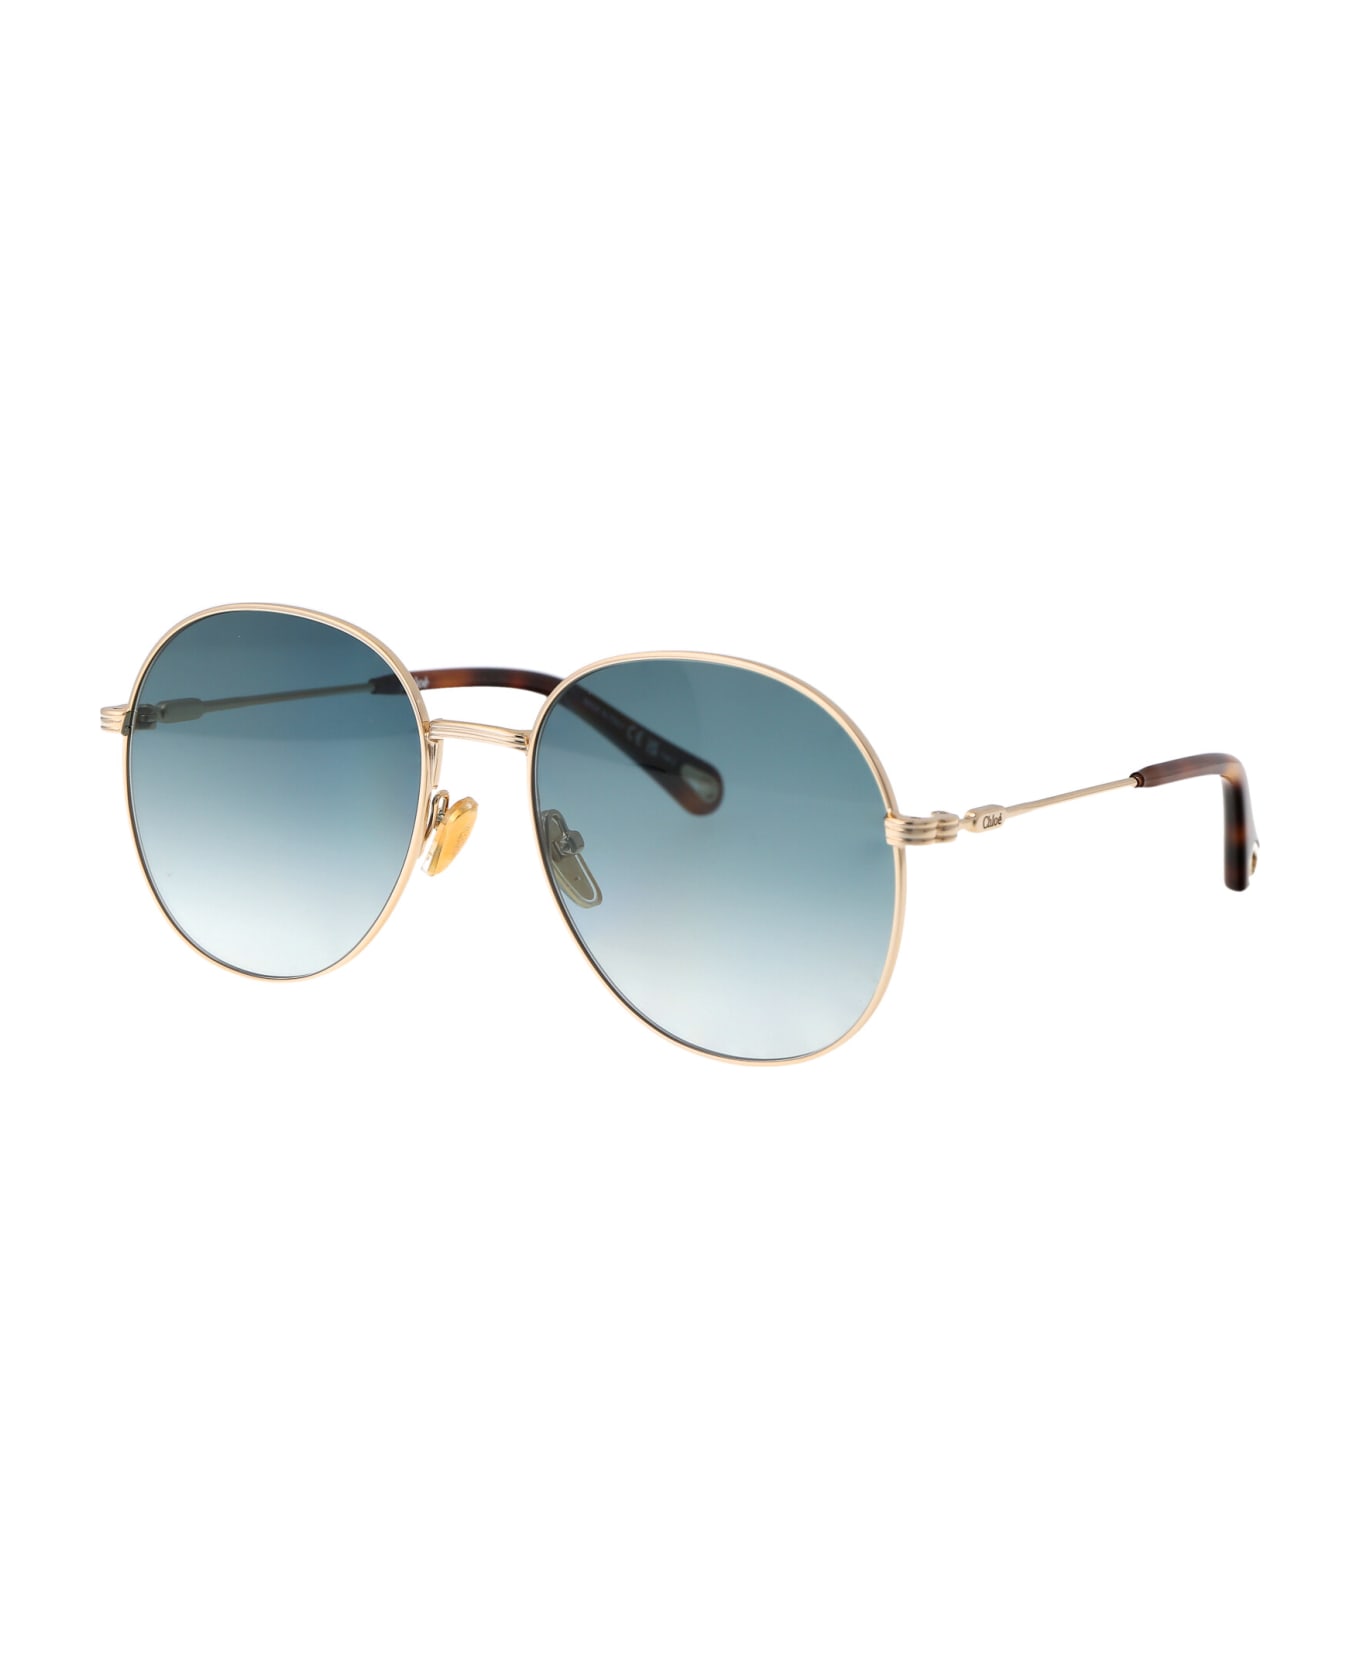 Chloé Eyewear Ch0178s Sunglasses - 004 GOLD GOLD GREEN サングラス